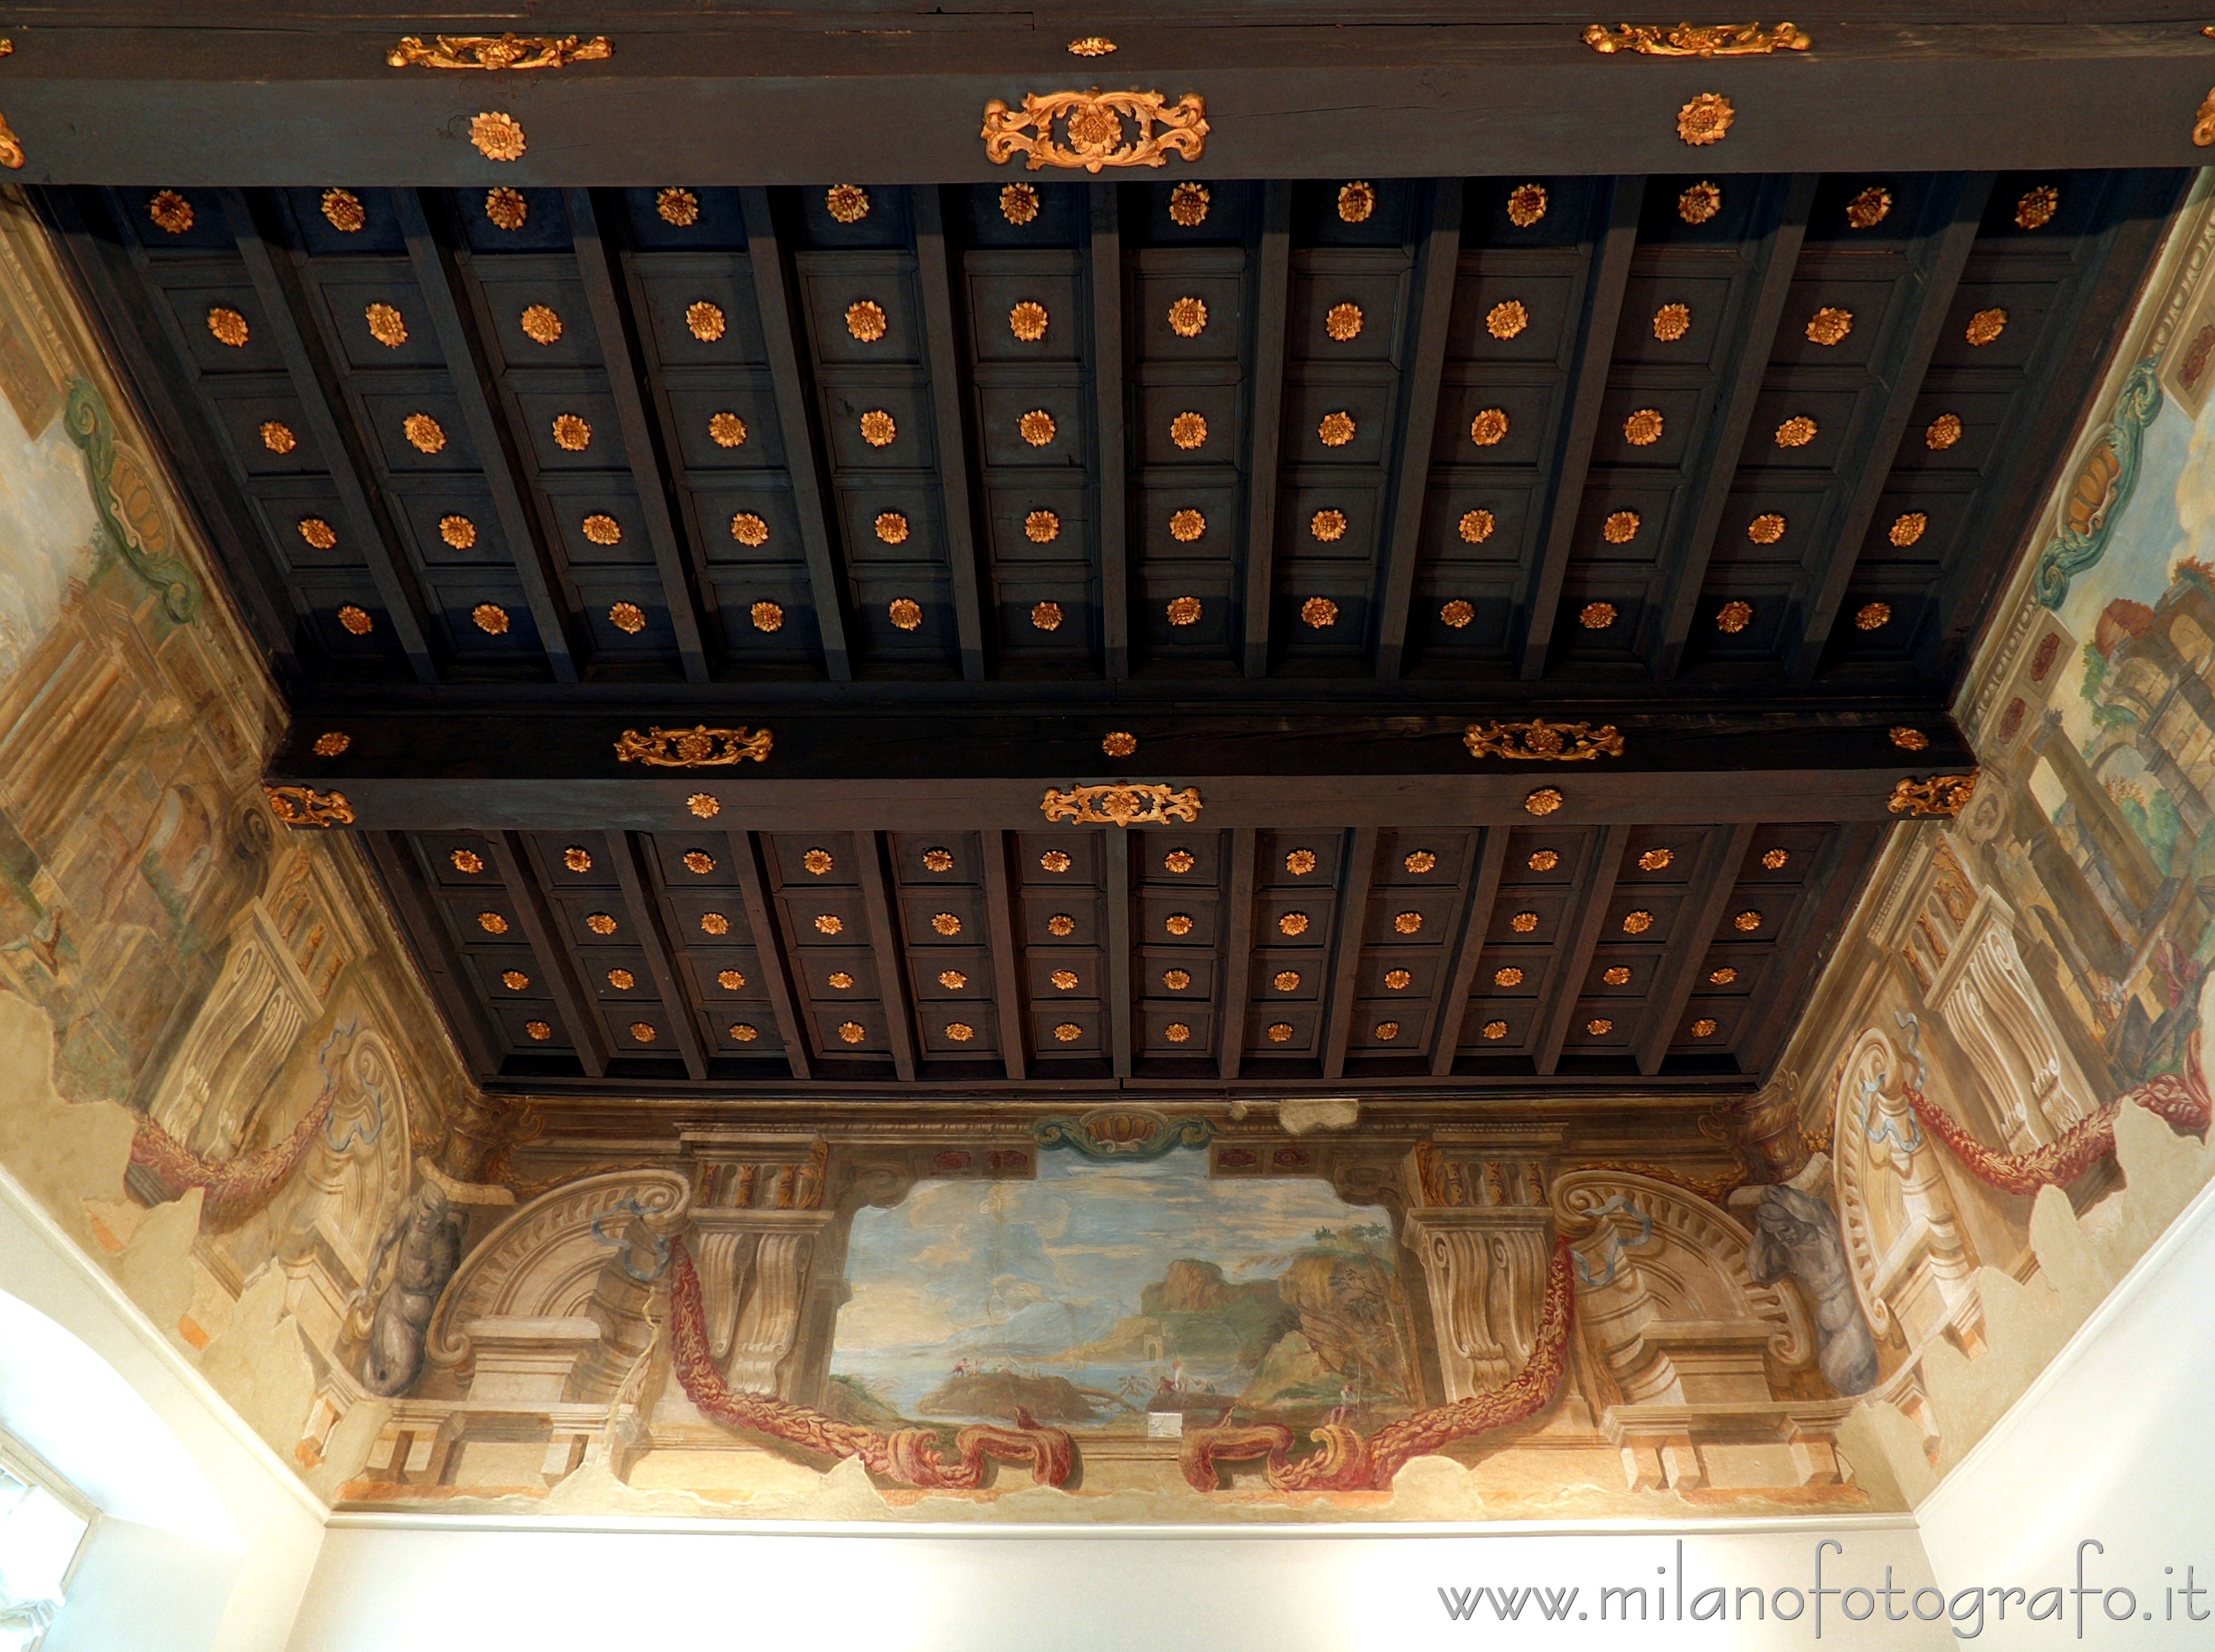 Cavenago di Brianza (Monza e Brianza, Italy): Ceiling of the hall of the talamons in Palace Rasini - Cavenago di Brianza (Monza e Brianza, Italy)